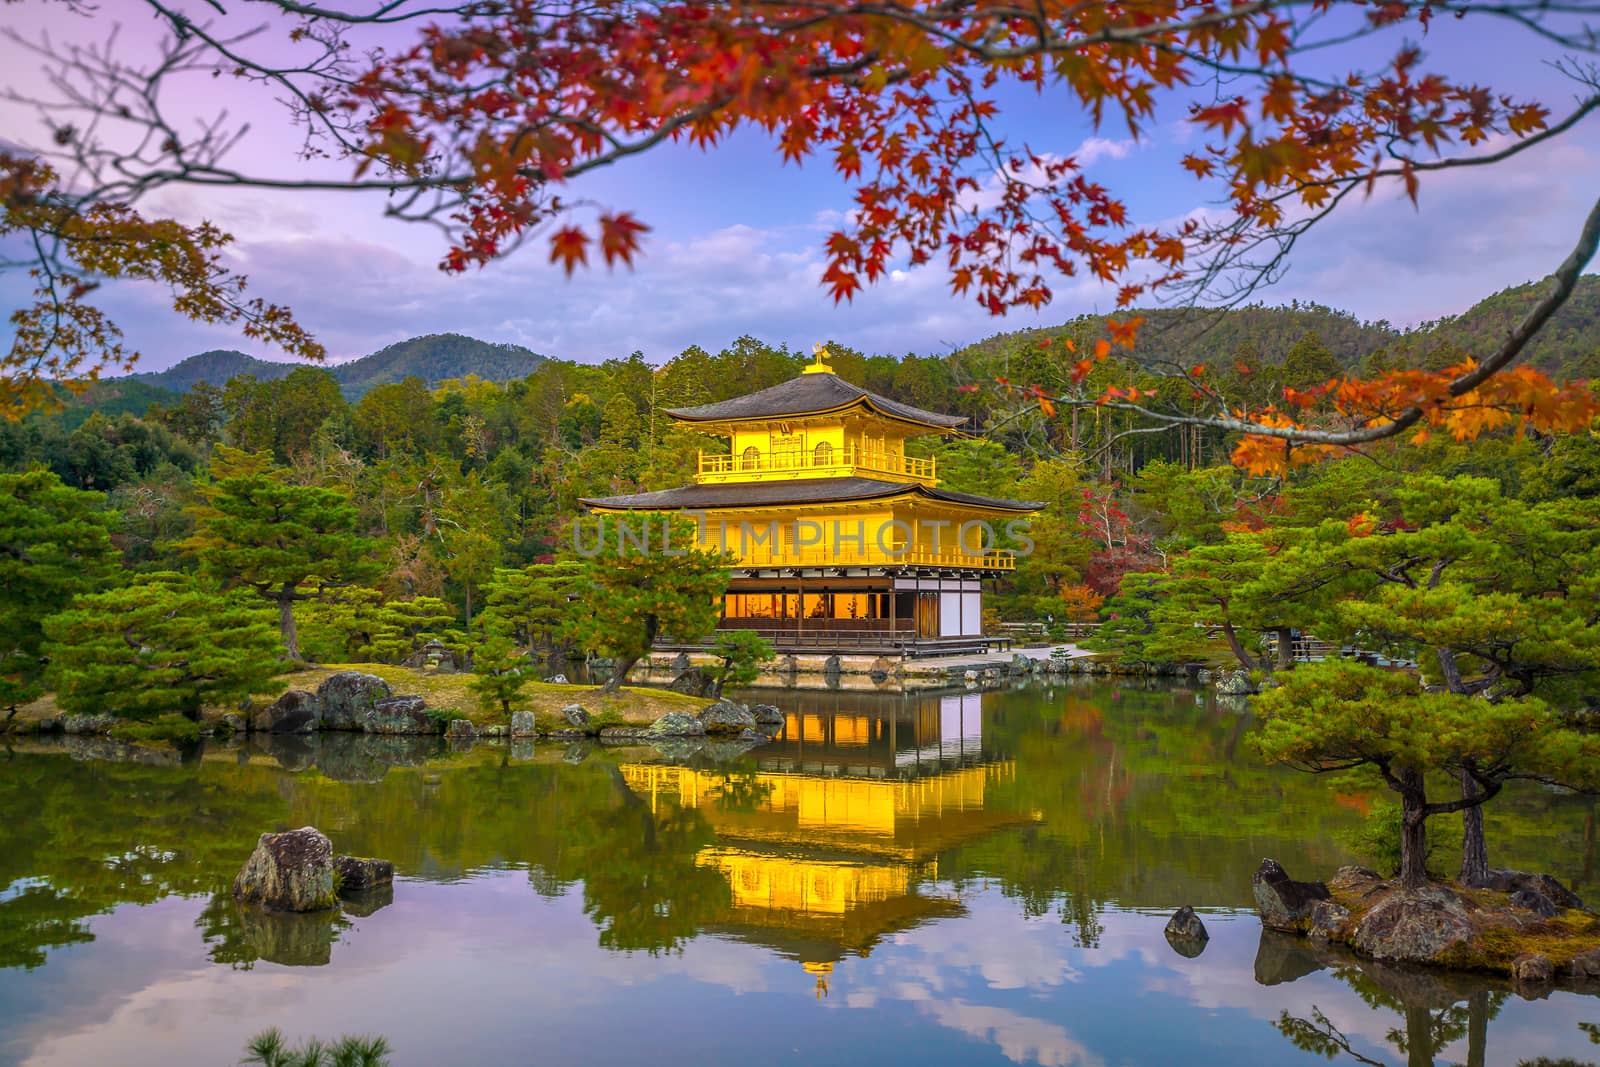 The Golden Pavilion of Kinkaku-ji temple in Kyoto, Japan by f11photo